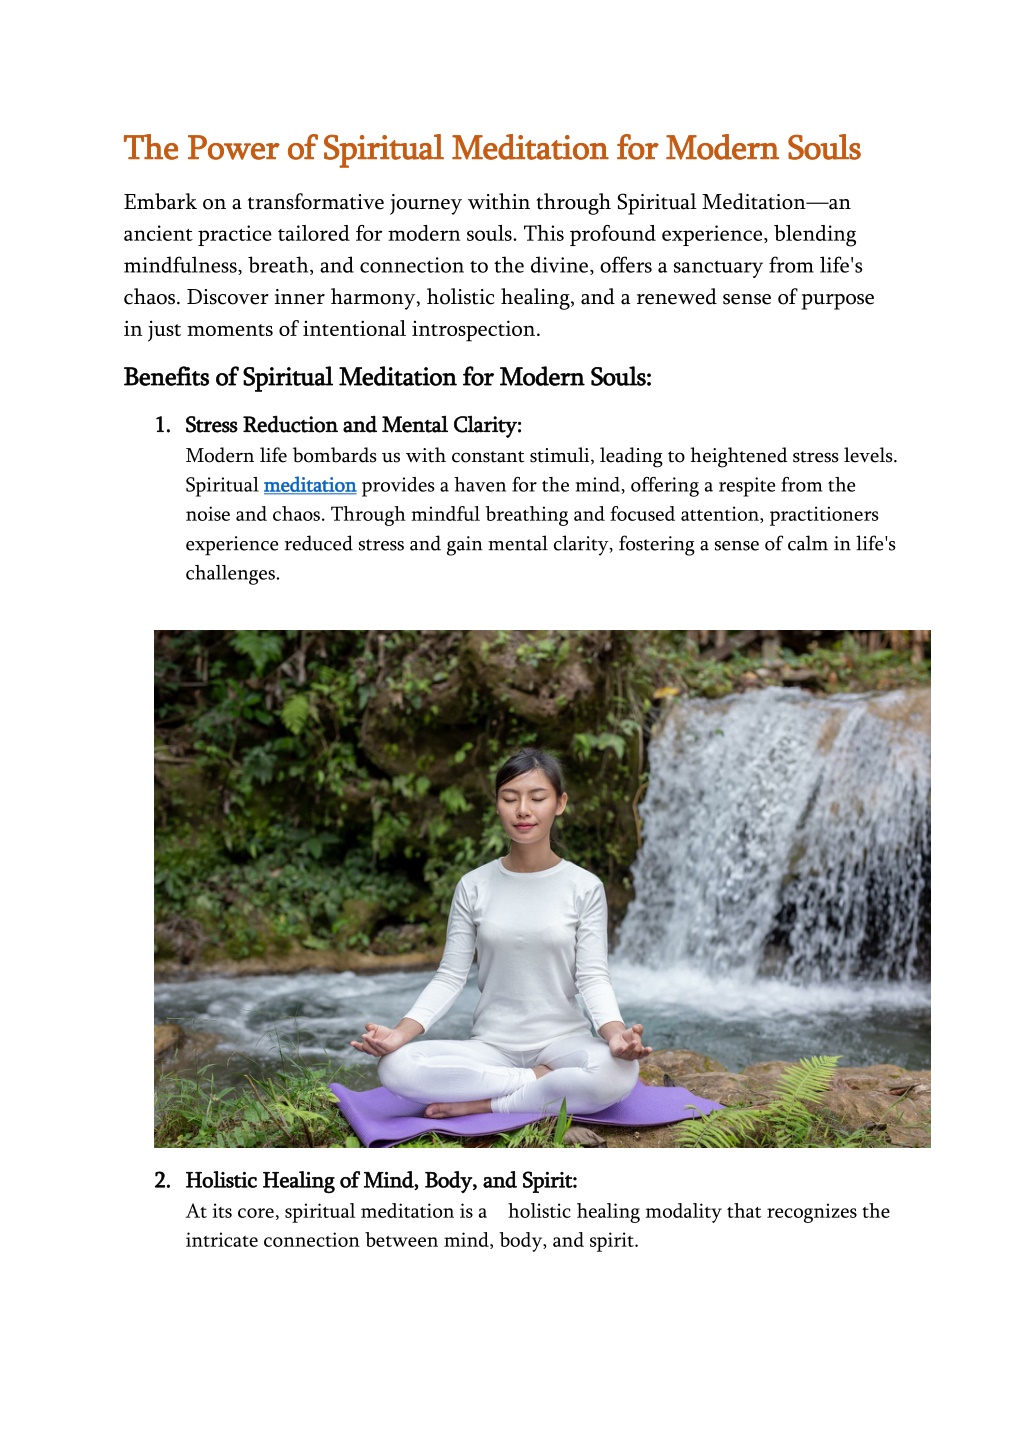 PPT - The Power of Spiritual Meditation for Modern Souls